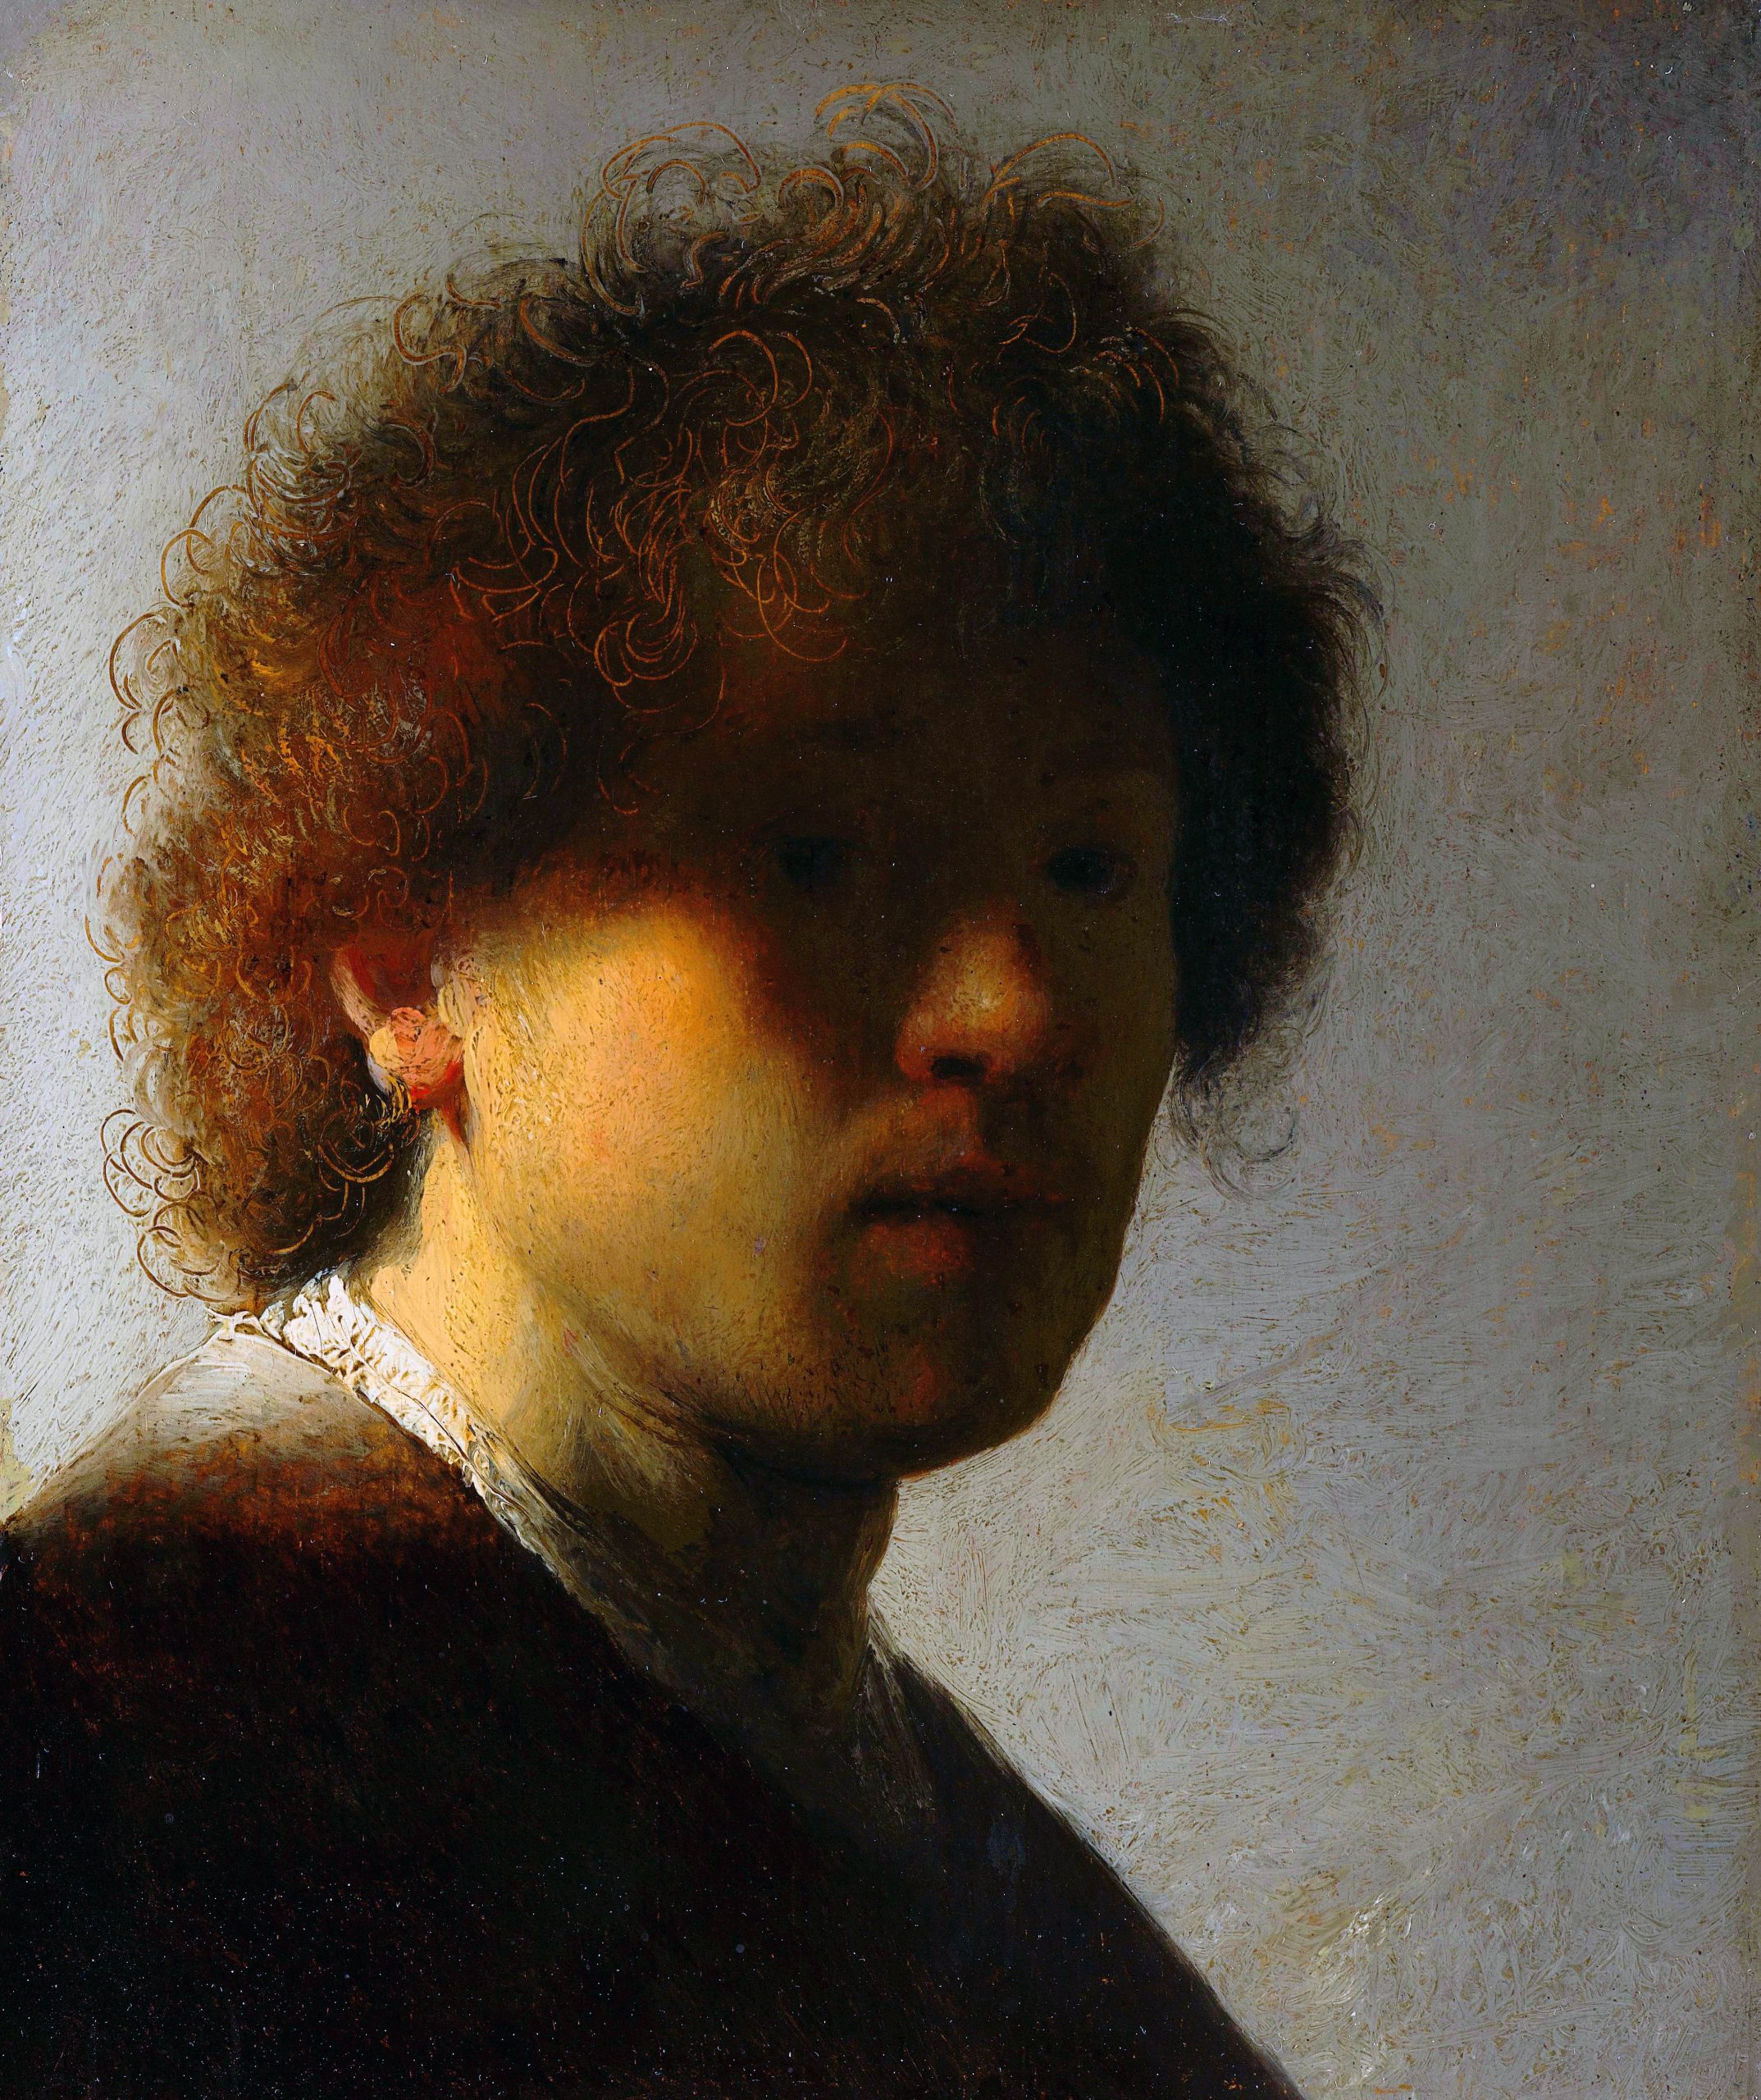 Rembrandt van Rijn, Self-Portrait, oil on canvas, ca. 1628 (Rijksmuseum, Amsterdam). Photo by Stuart Rankin, CC BY-NC 2.0.